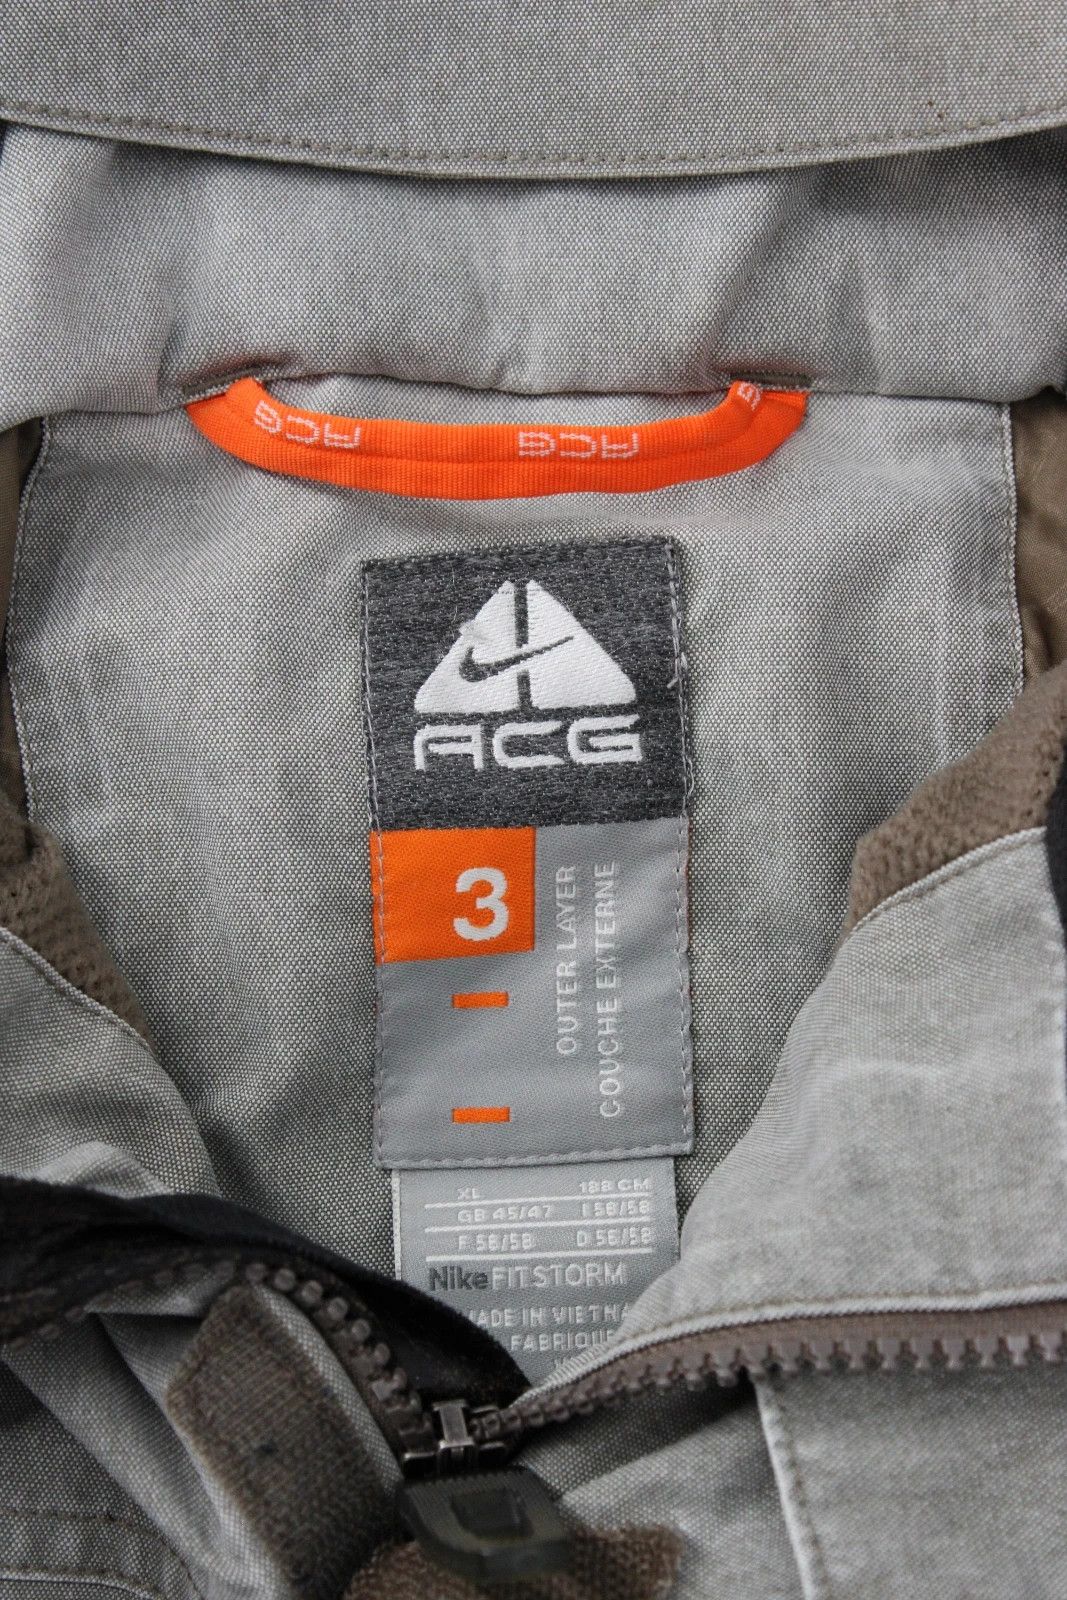 Nike ACG 90s Nike ACG 3 Storm Fit Jacket multipocket | Grailed